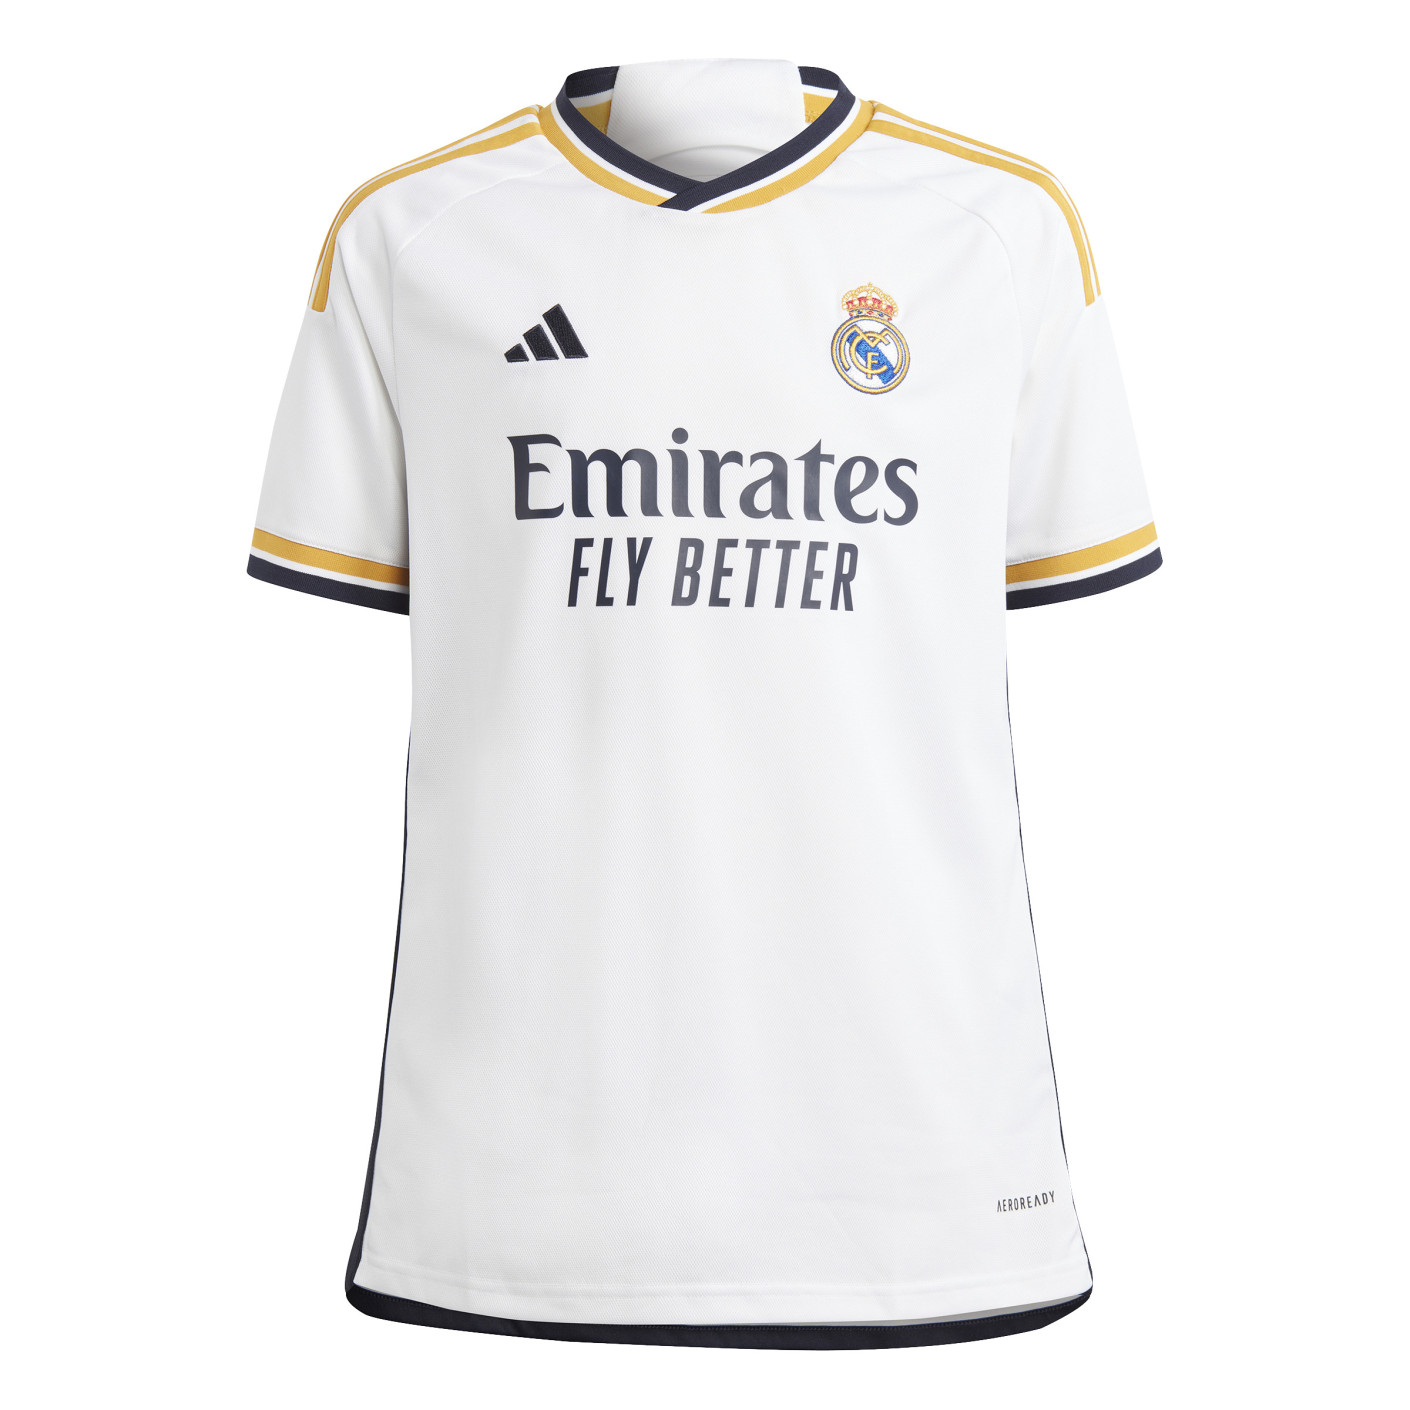 KIT maillot Real Madrid + short + chaussettes - Maillots/Enfants - ALLSPORT